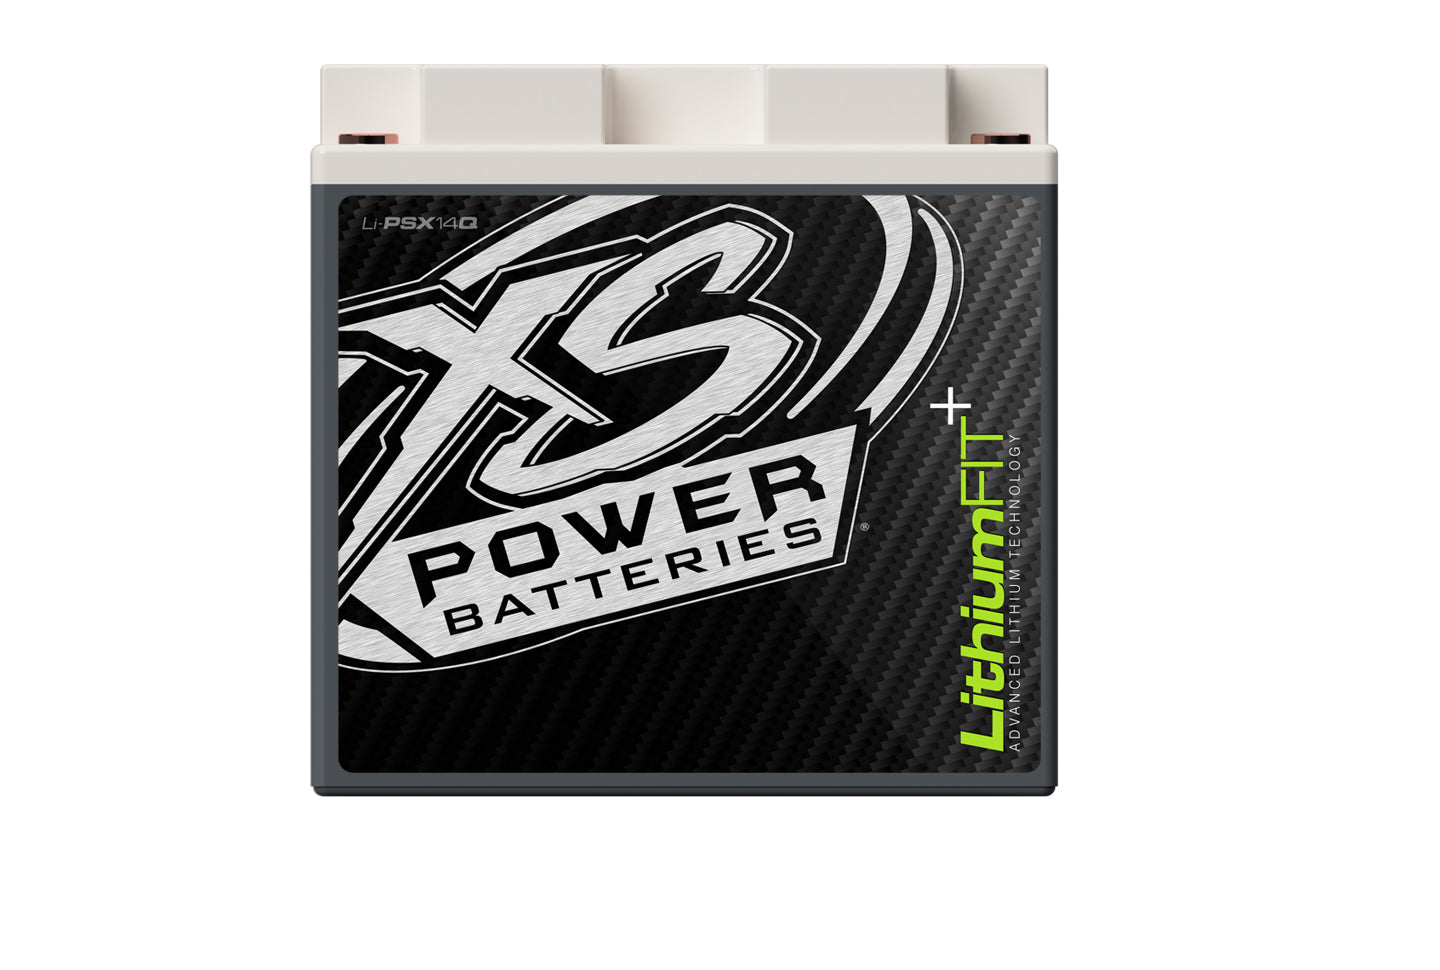 Li-PSX14Q XS Power 12VDC Lithium Powersports Battery 480A 5.2Ah Group 14L